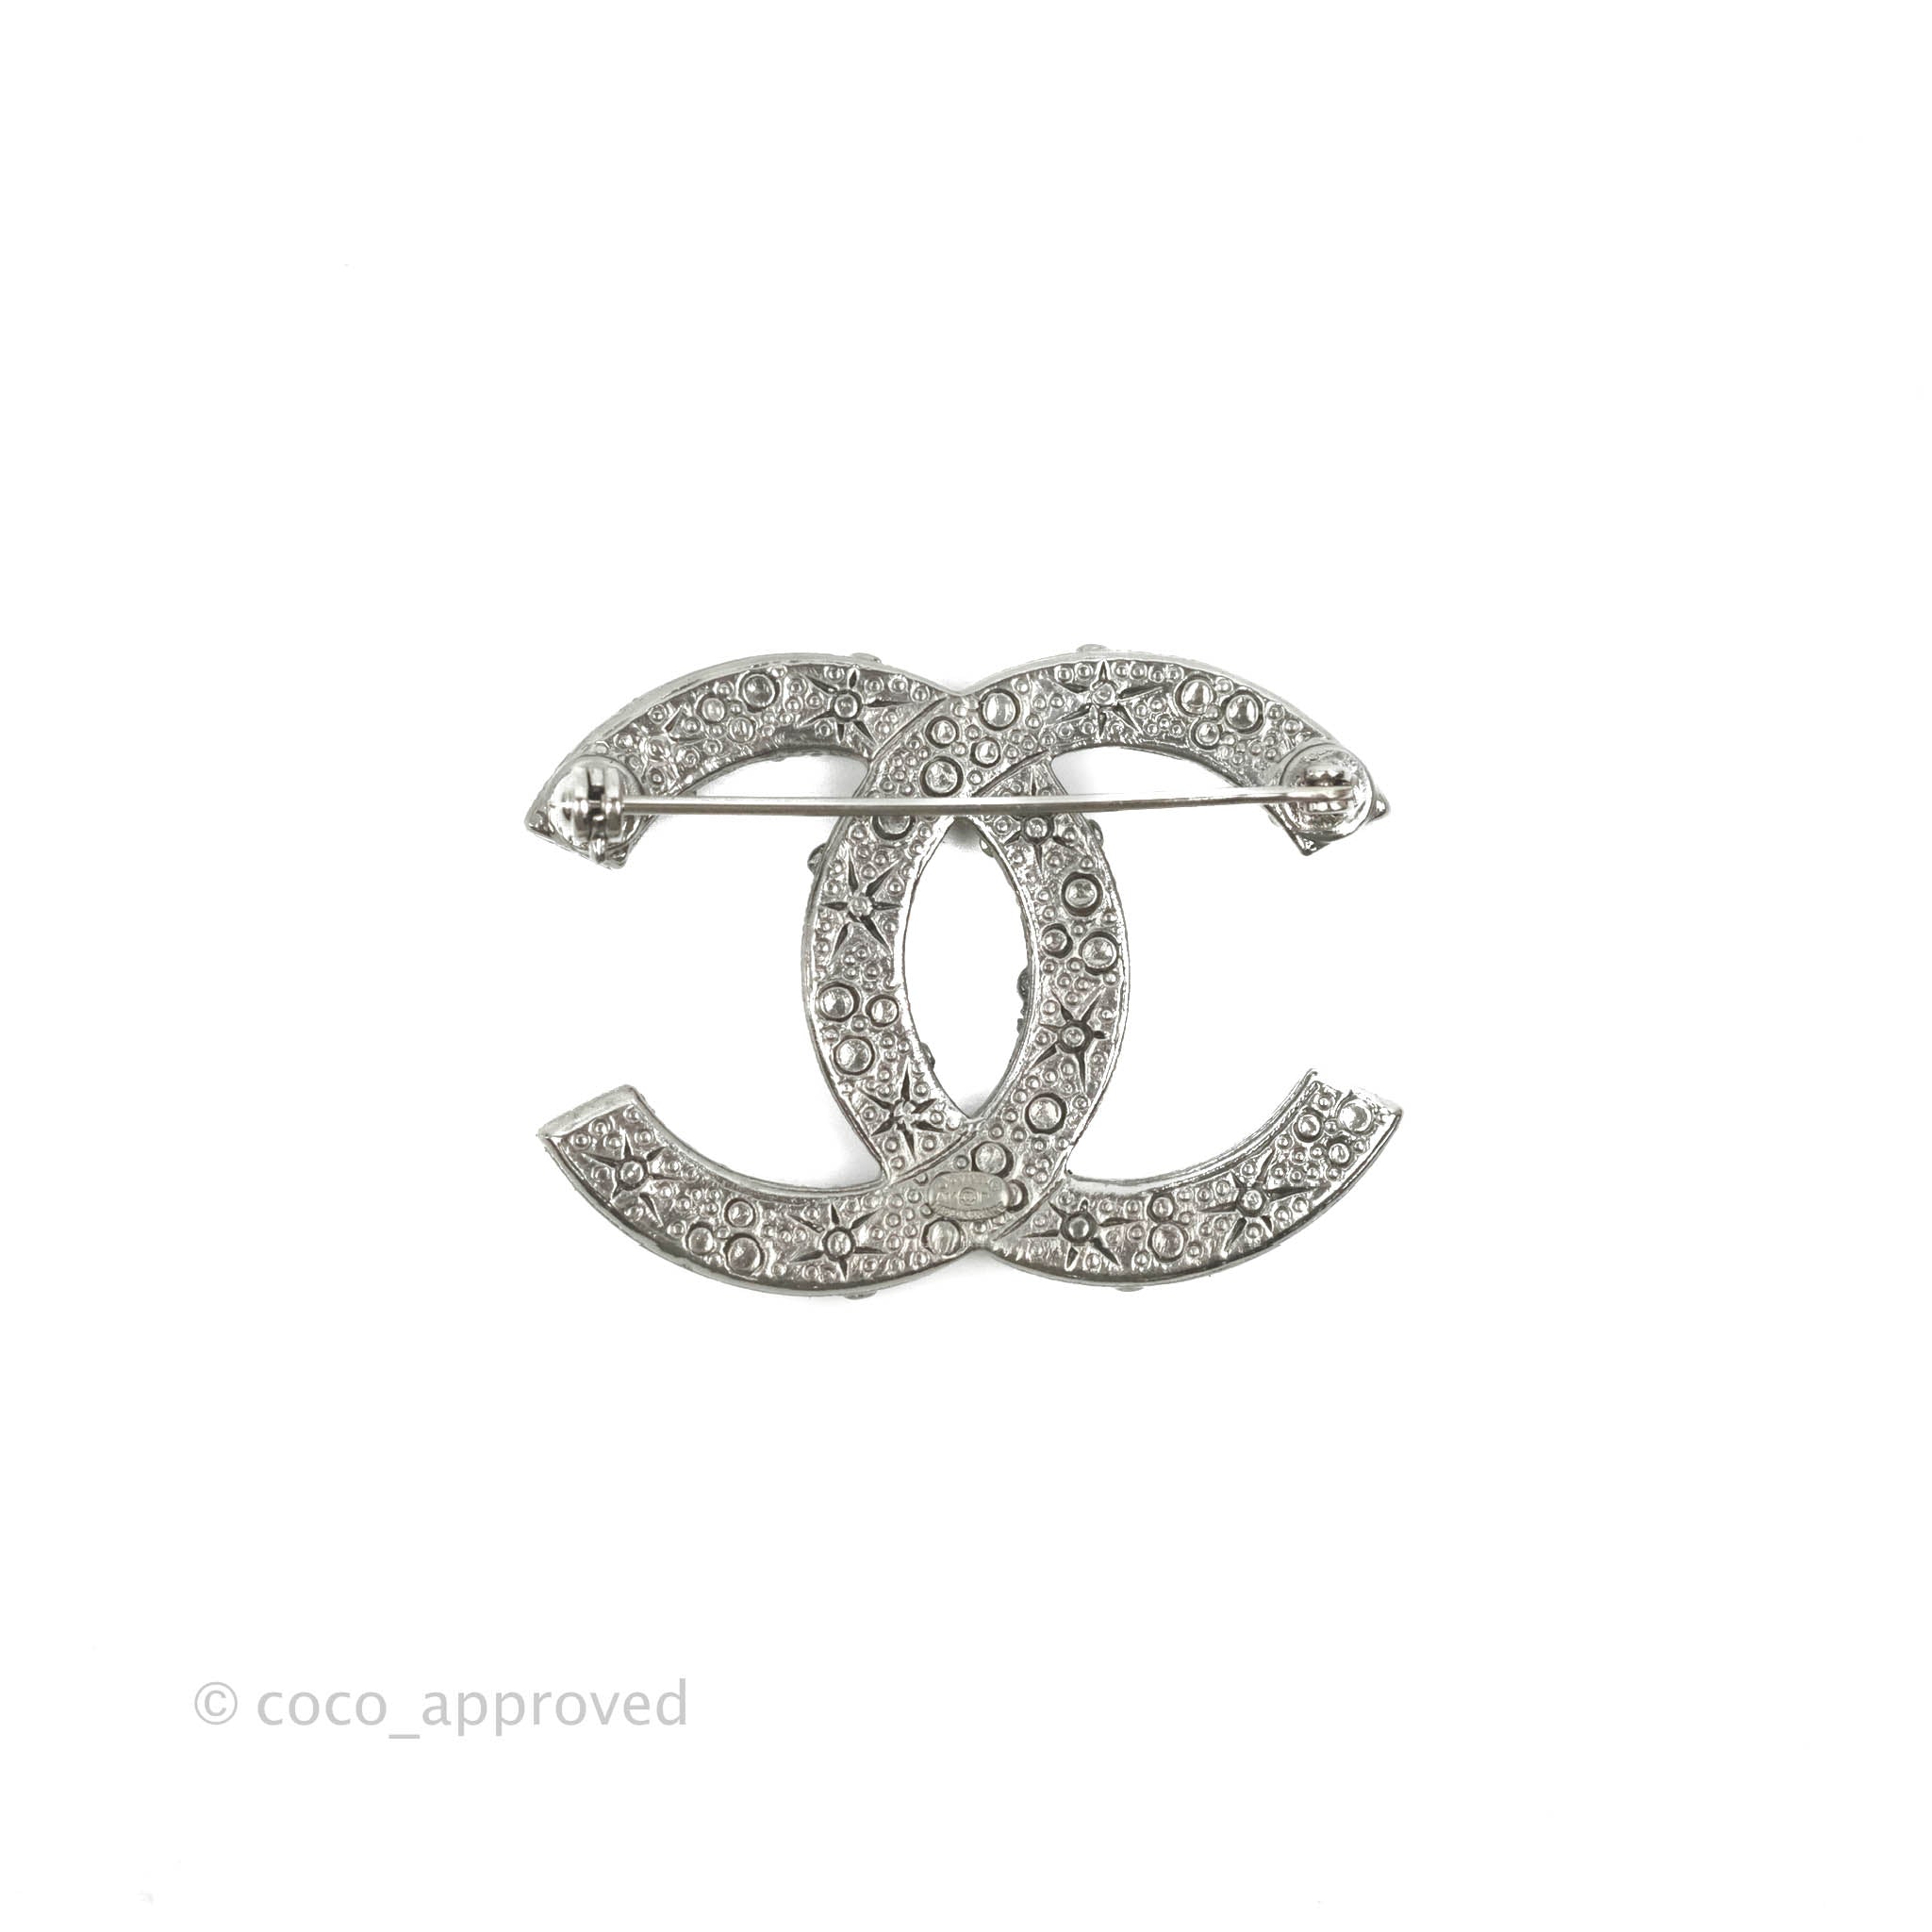 Chanel Brand New Classic Silver CC Crystal XL Brooch - LAR Vintage